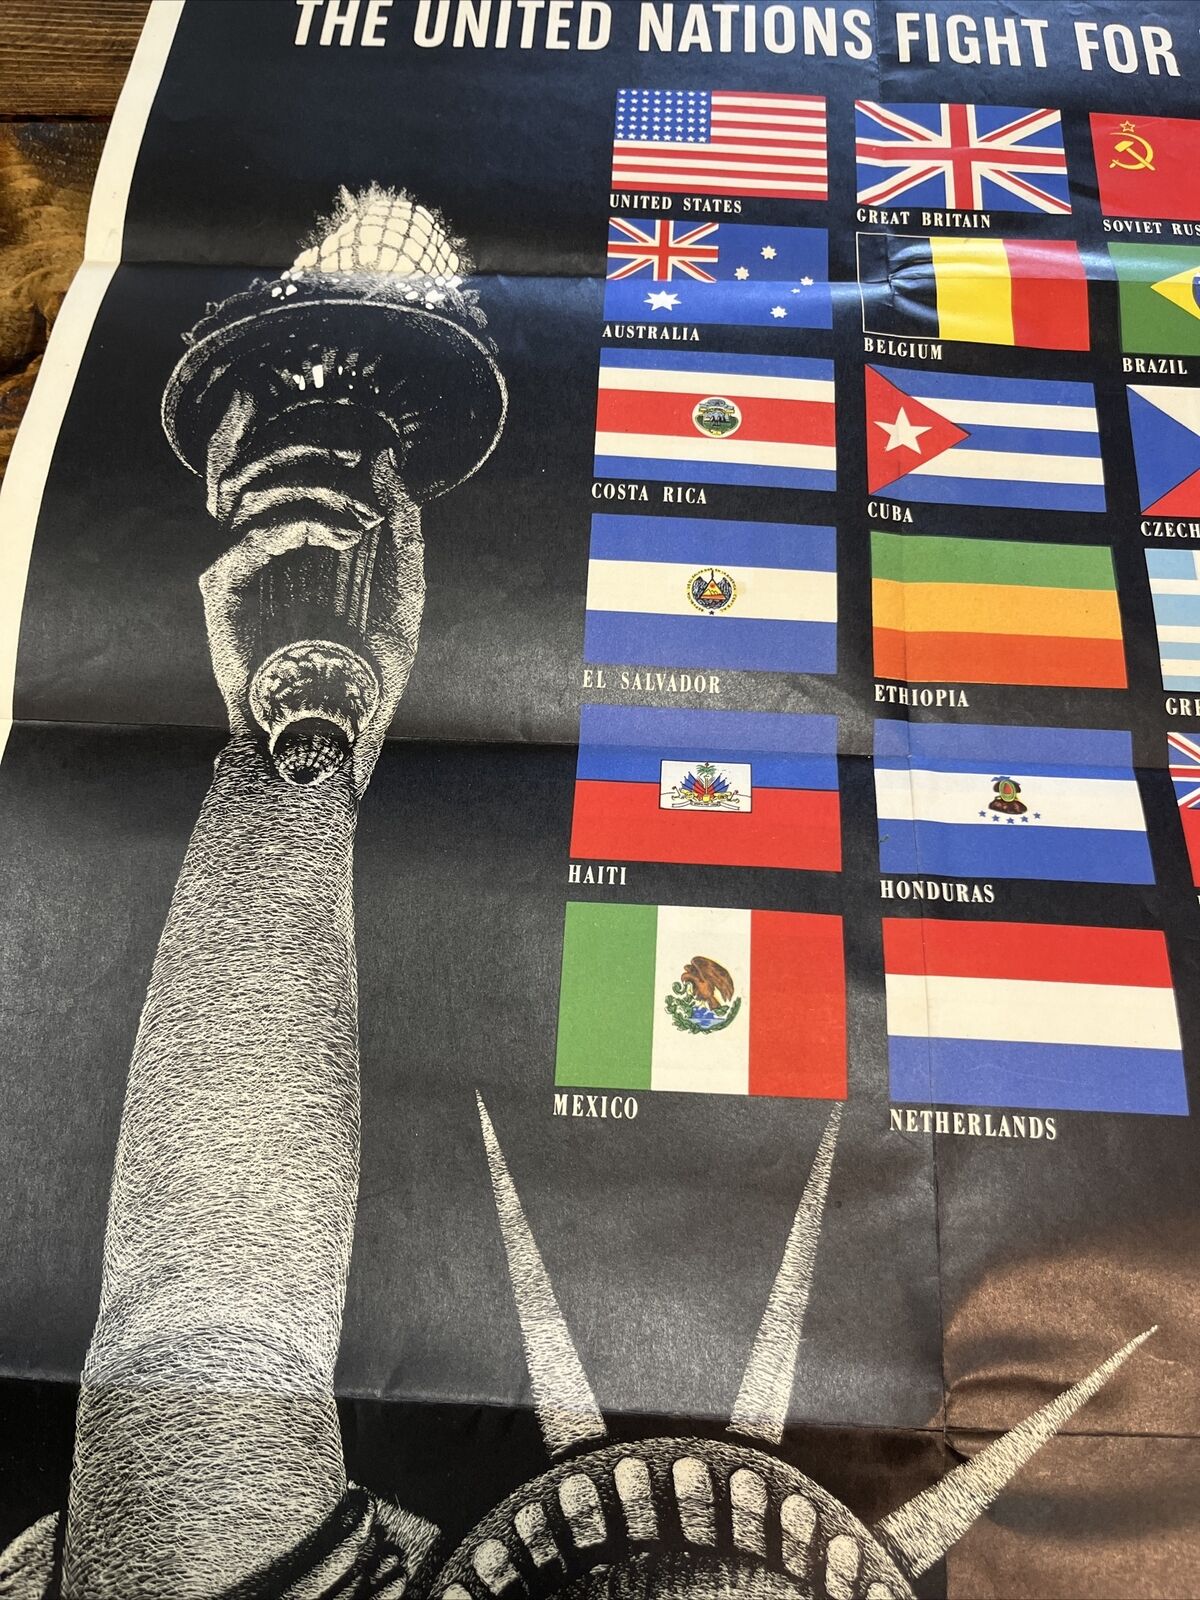 Original 1942 World War II Poster "THE UNITED NATIONS FIGHT FOR FREEDOM" Без бренда - фотография #8